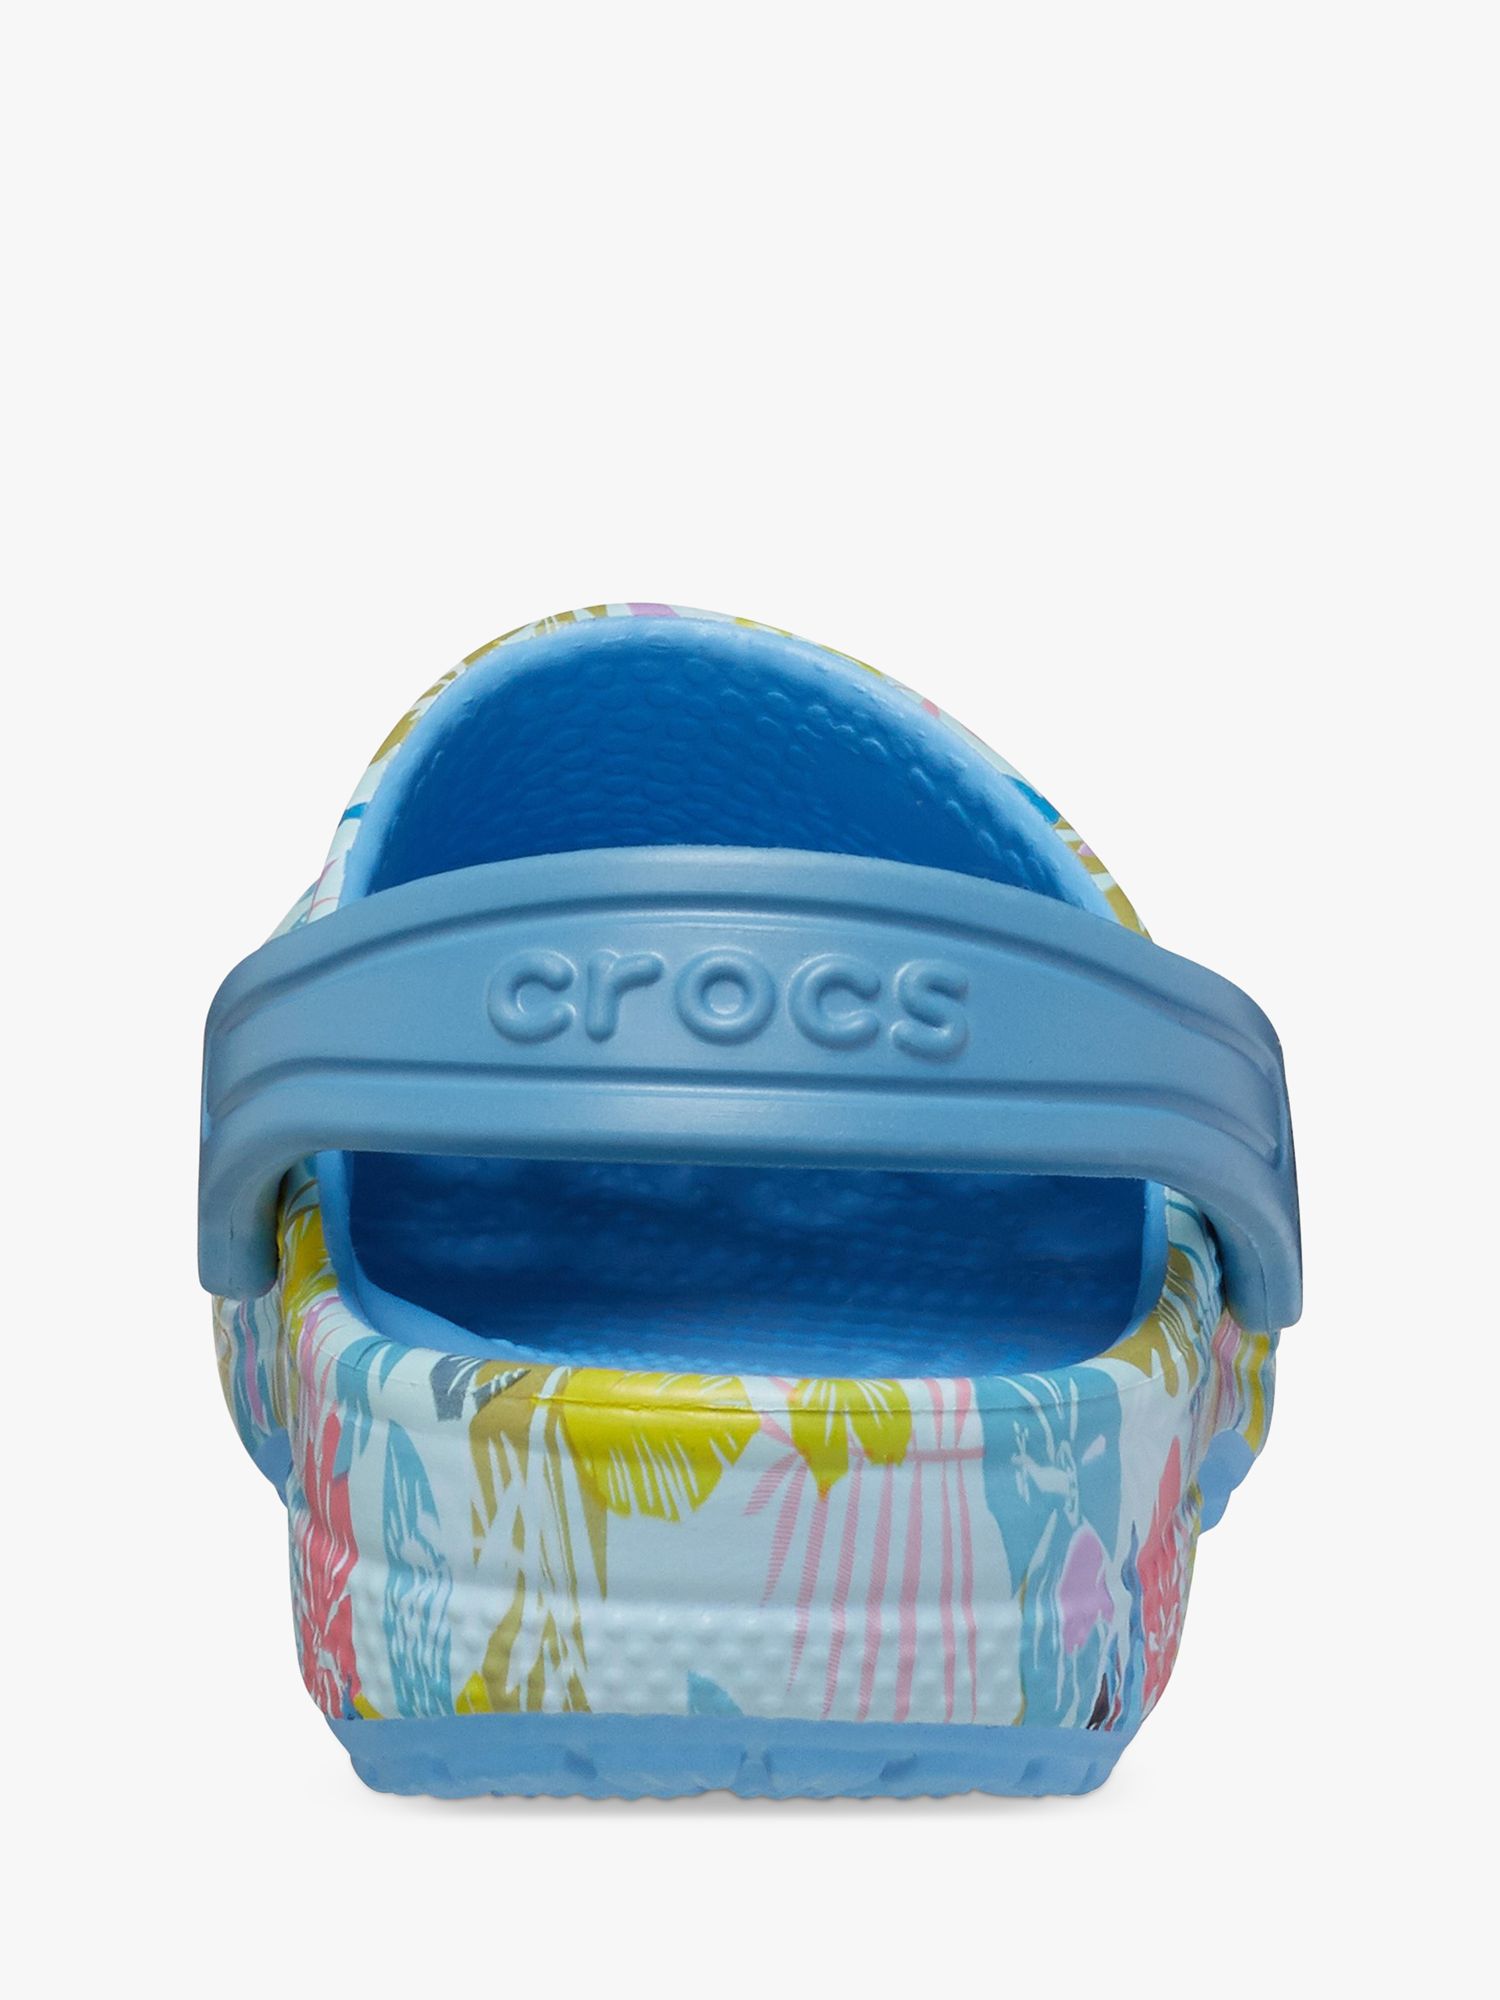 Buy Crocs Kids' Stitch Classic Clogs, Blue/Multi Online at johnlewis.com